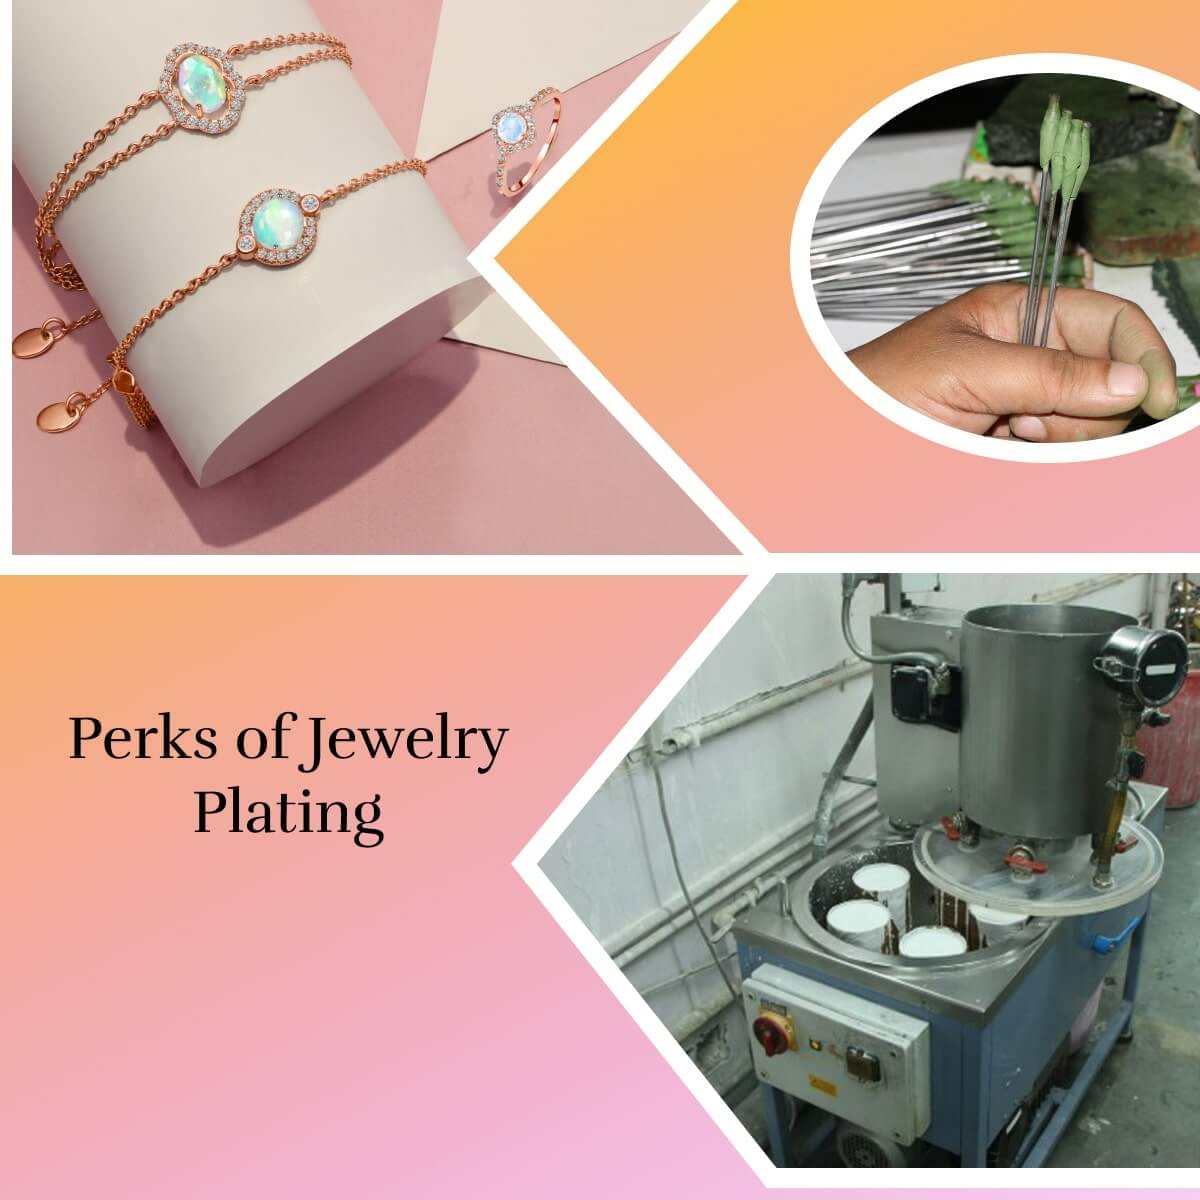 Benefits of Jewelry Plating